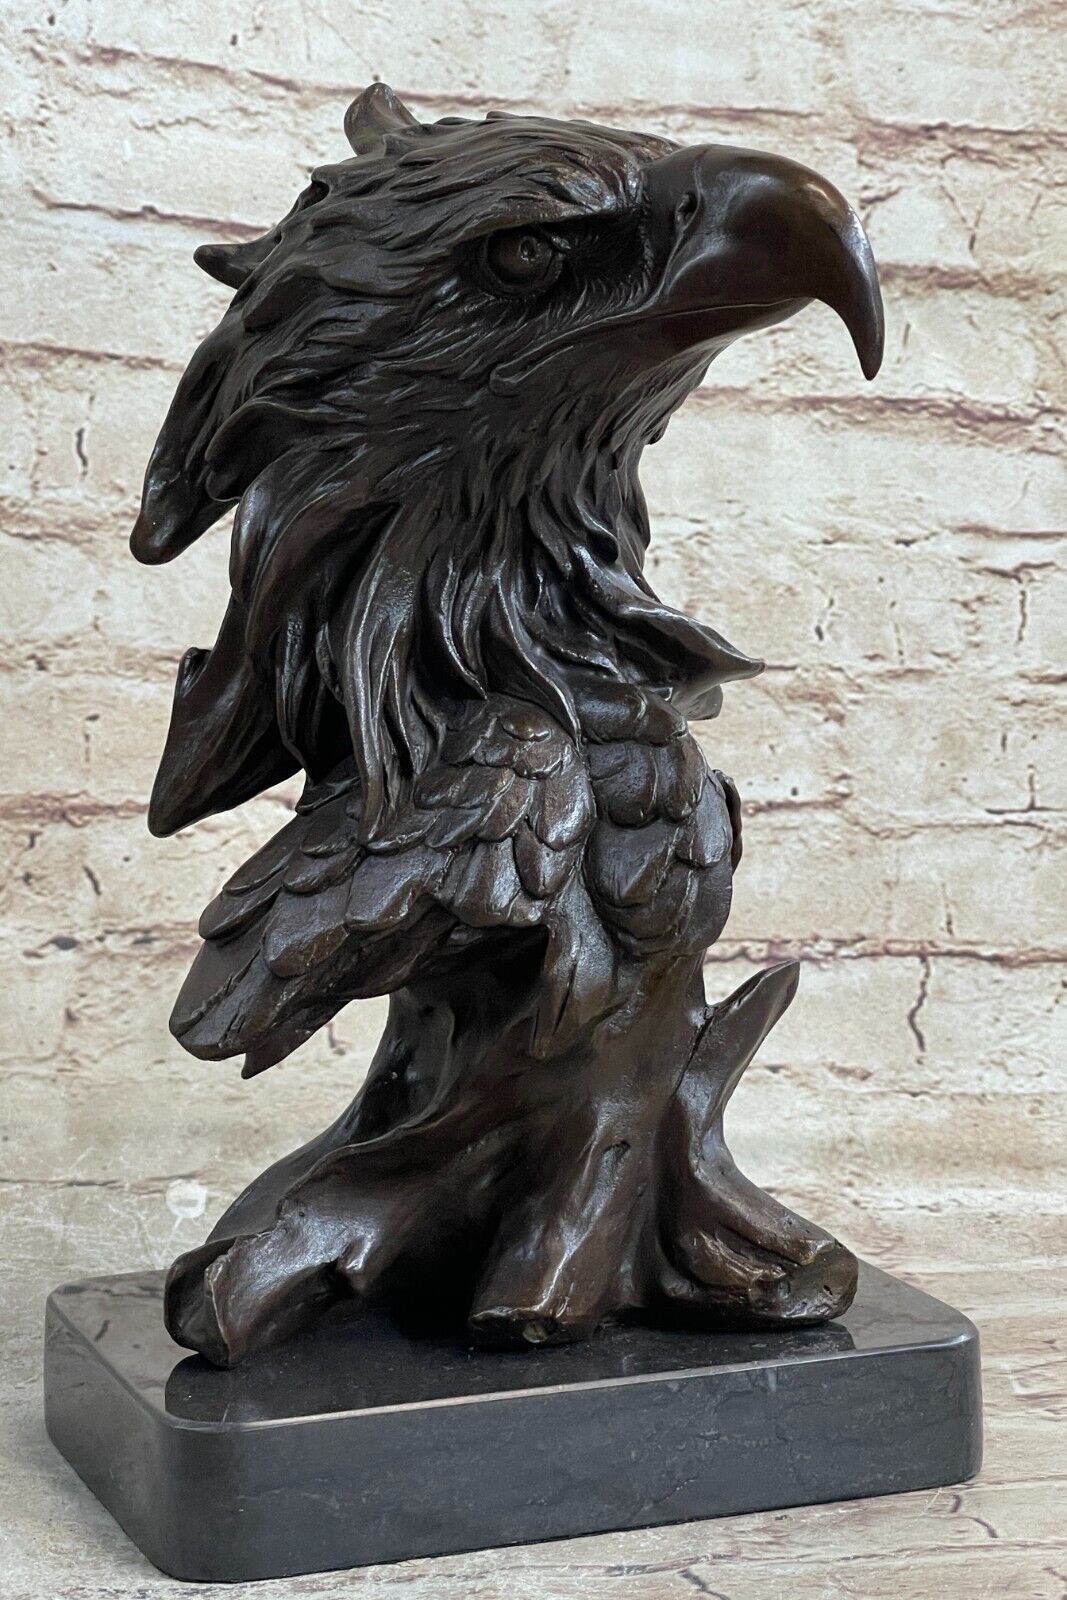 Art Deco Bald American Eagle Bust Bronze Sculpture on Marble Base Figurine